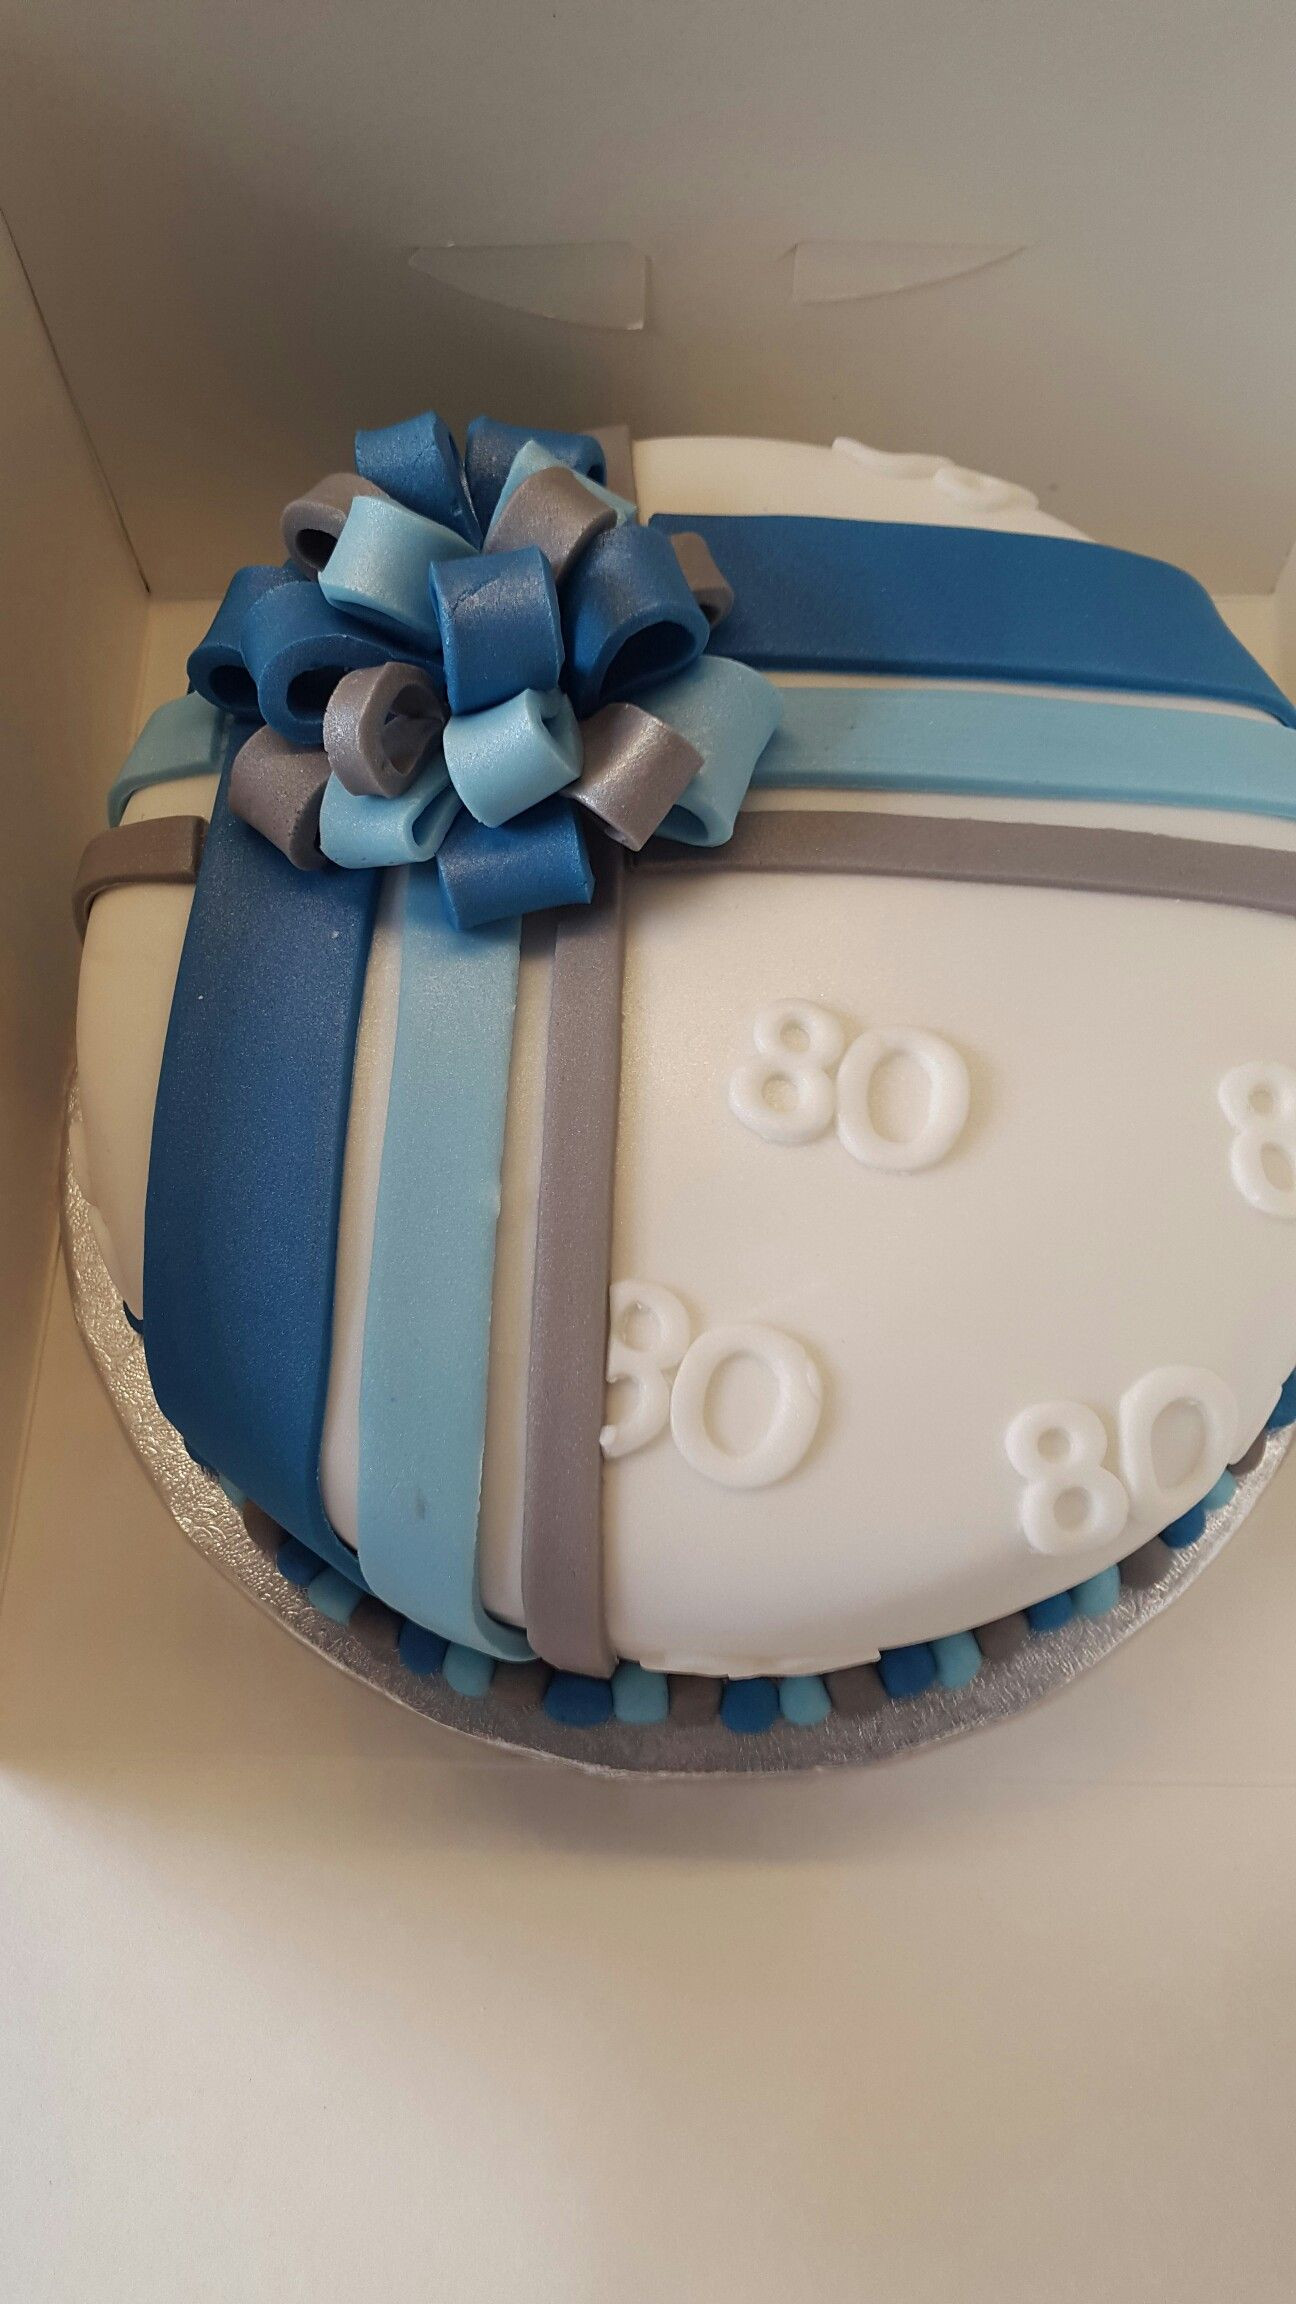 Birthday Cake For Man
 Men s 80th birthday cake in 2019